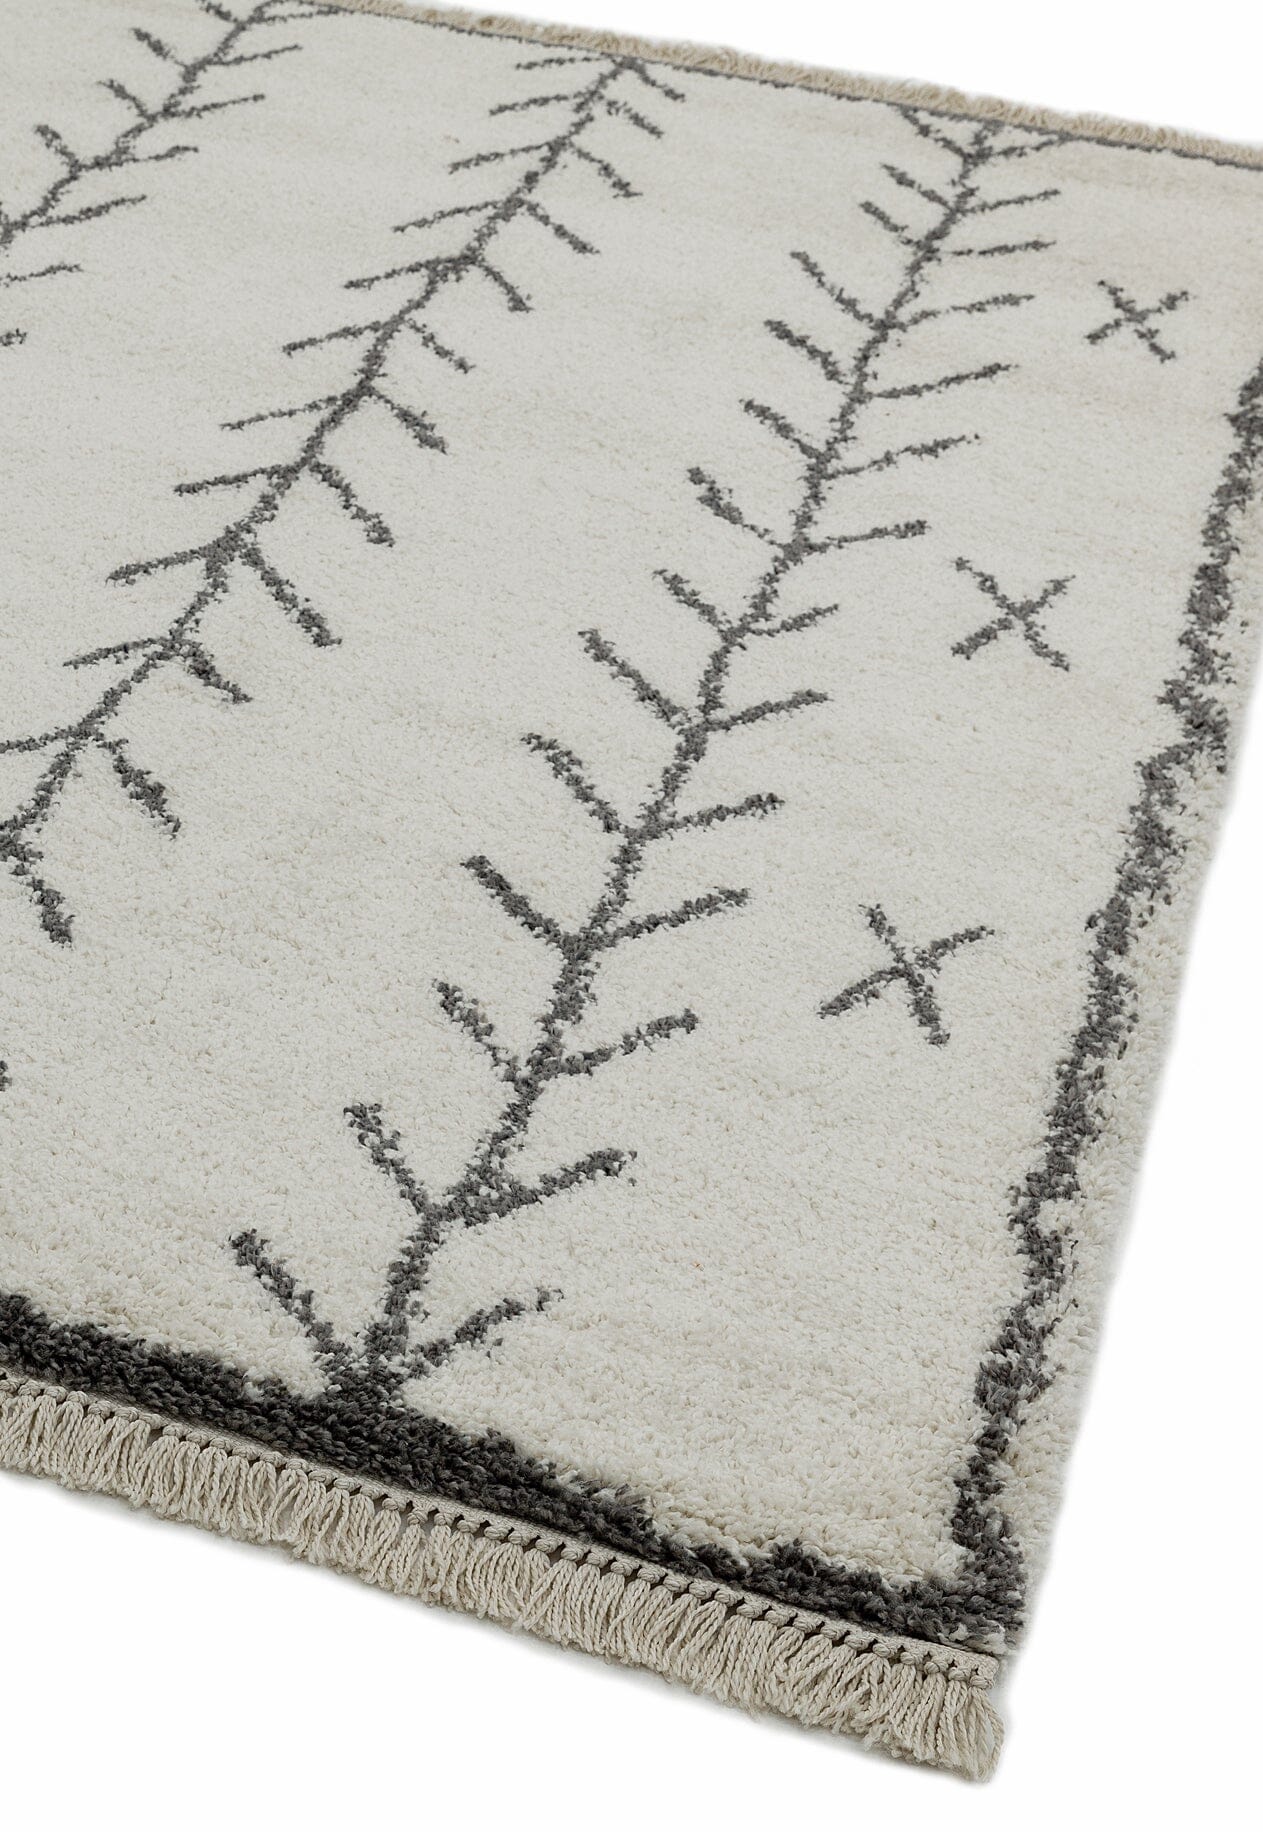  Asiatic Carpets-Asiatic Carpets Rocco Machine Woven Rug CREAM ARROW - 160 x 230cm-Black, White 445 